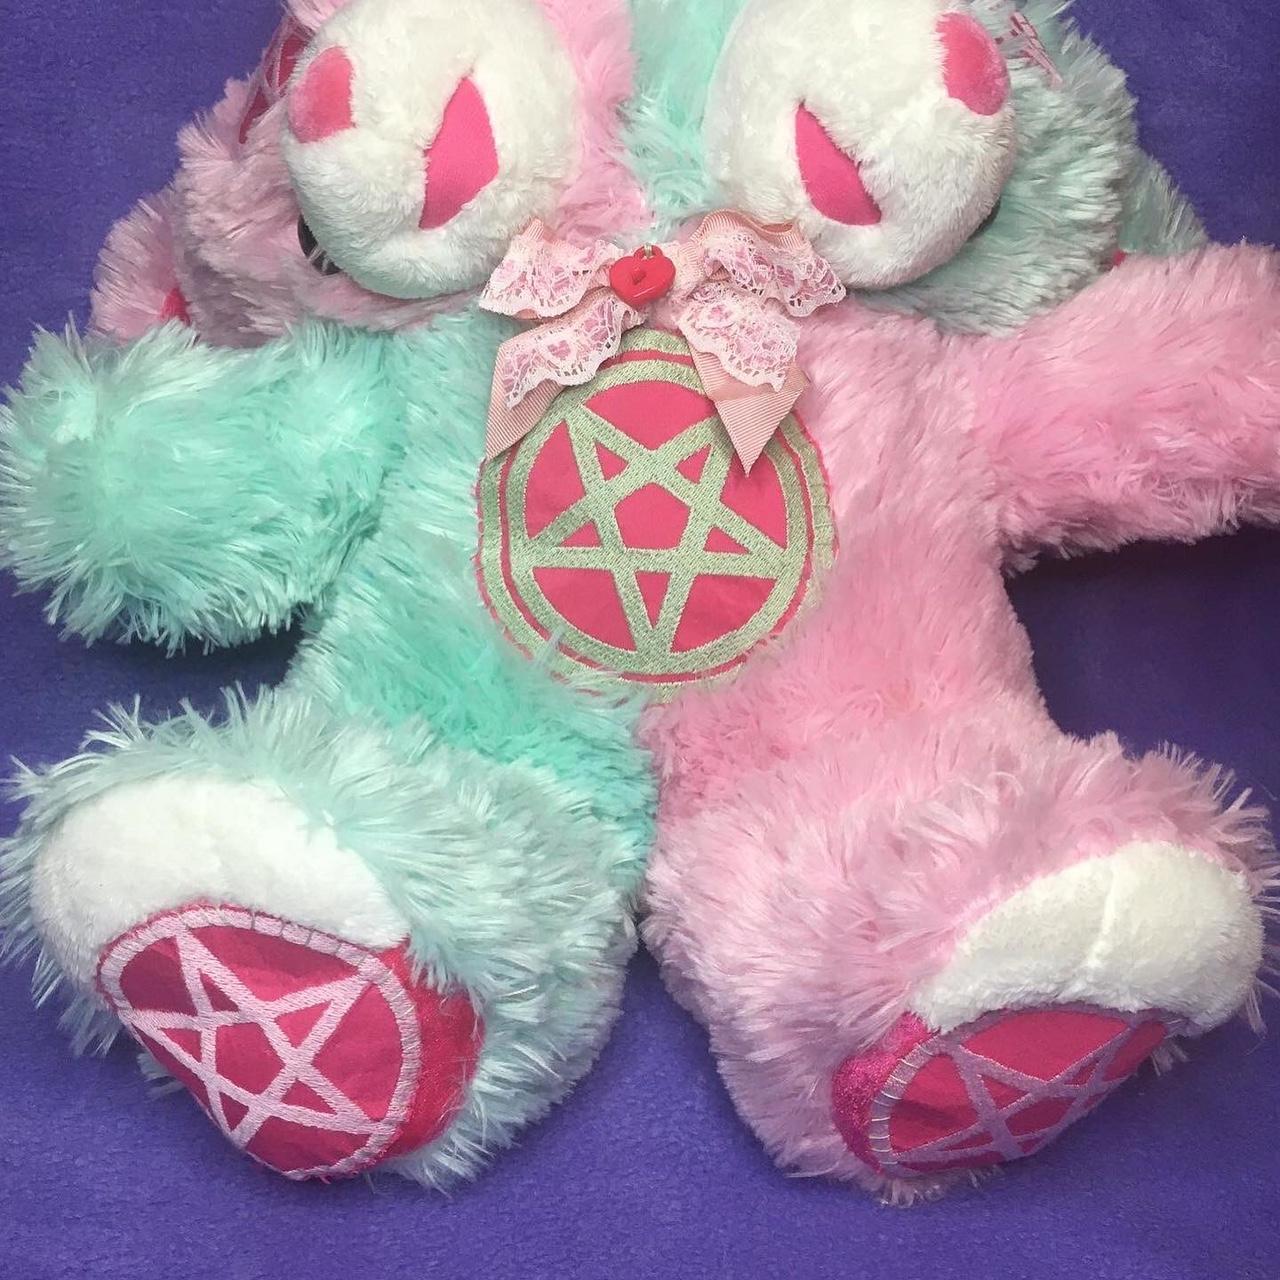 creepy cute pink bunny plush / plushie! cute for - Depop